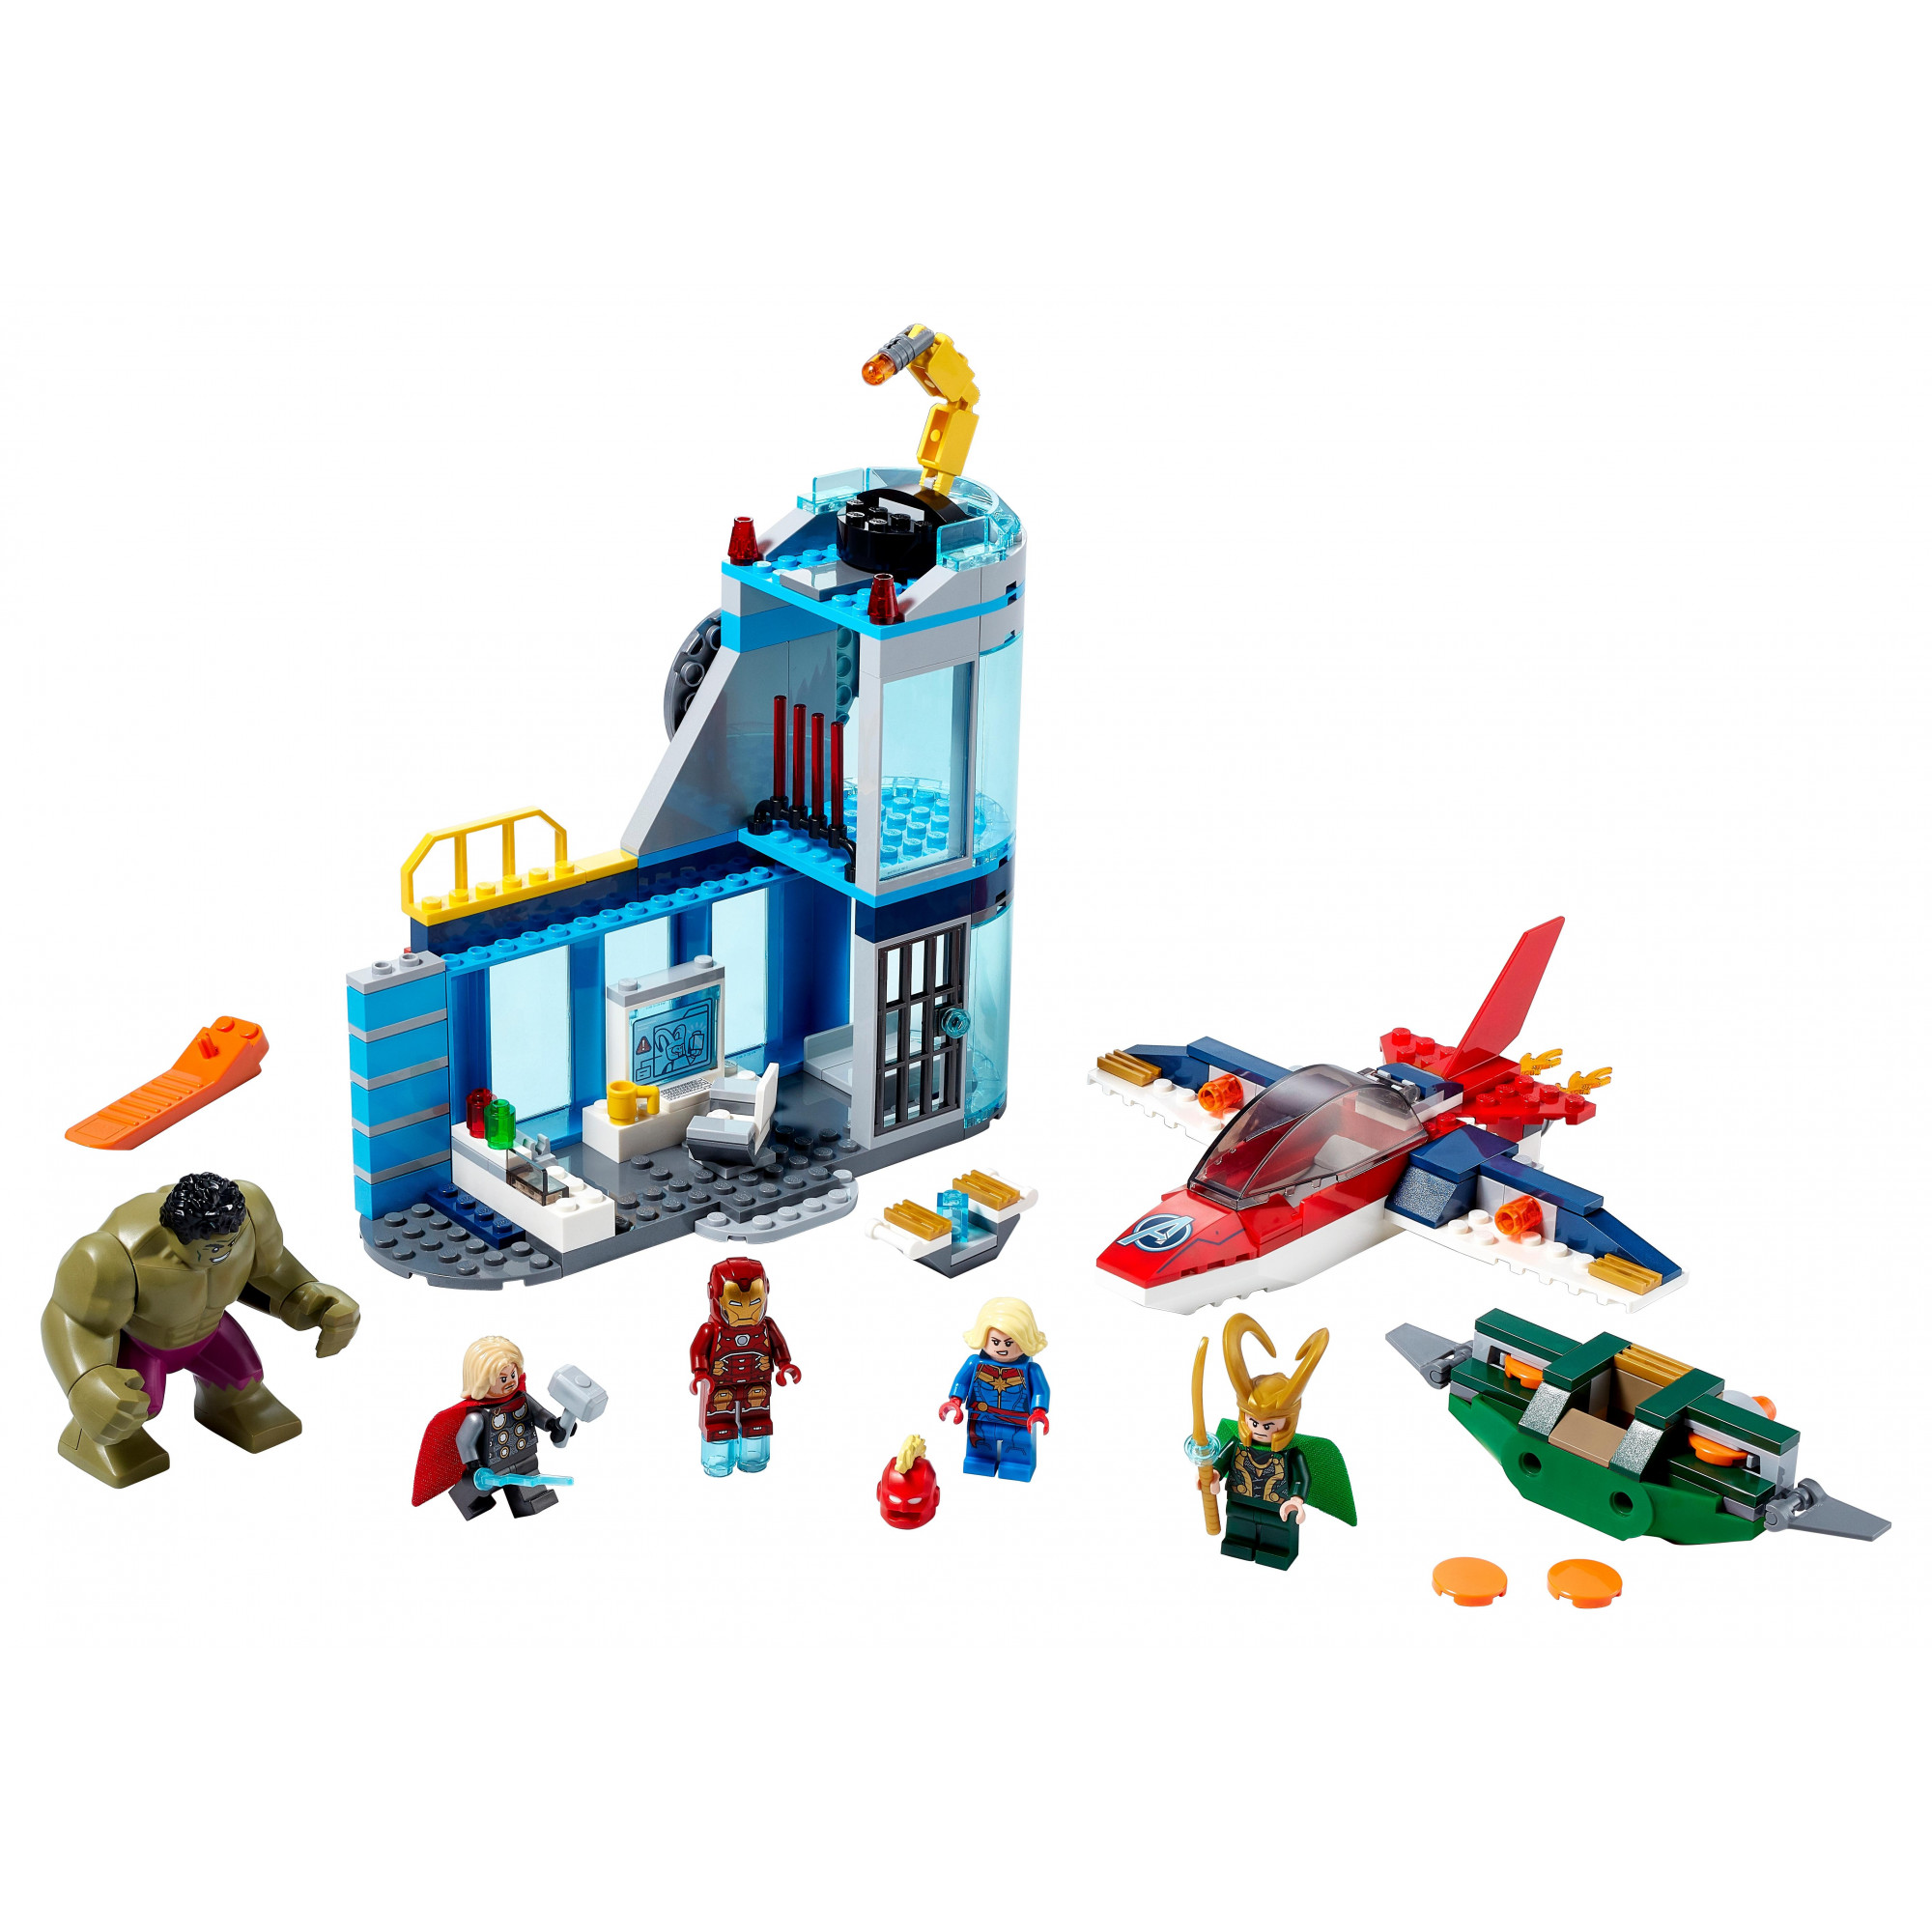 LEGO Super Heroes Мстители: гнев Локи 223 детали (76152) - зображення 1